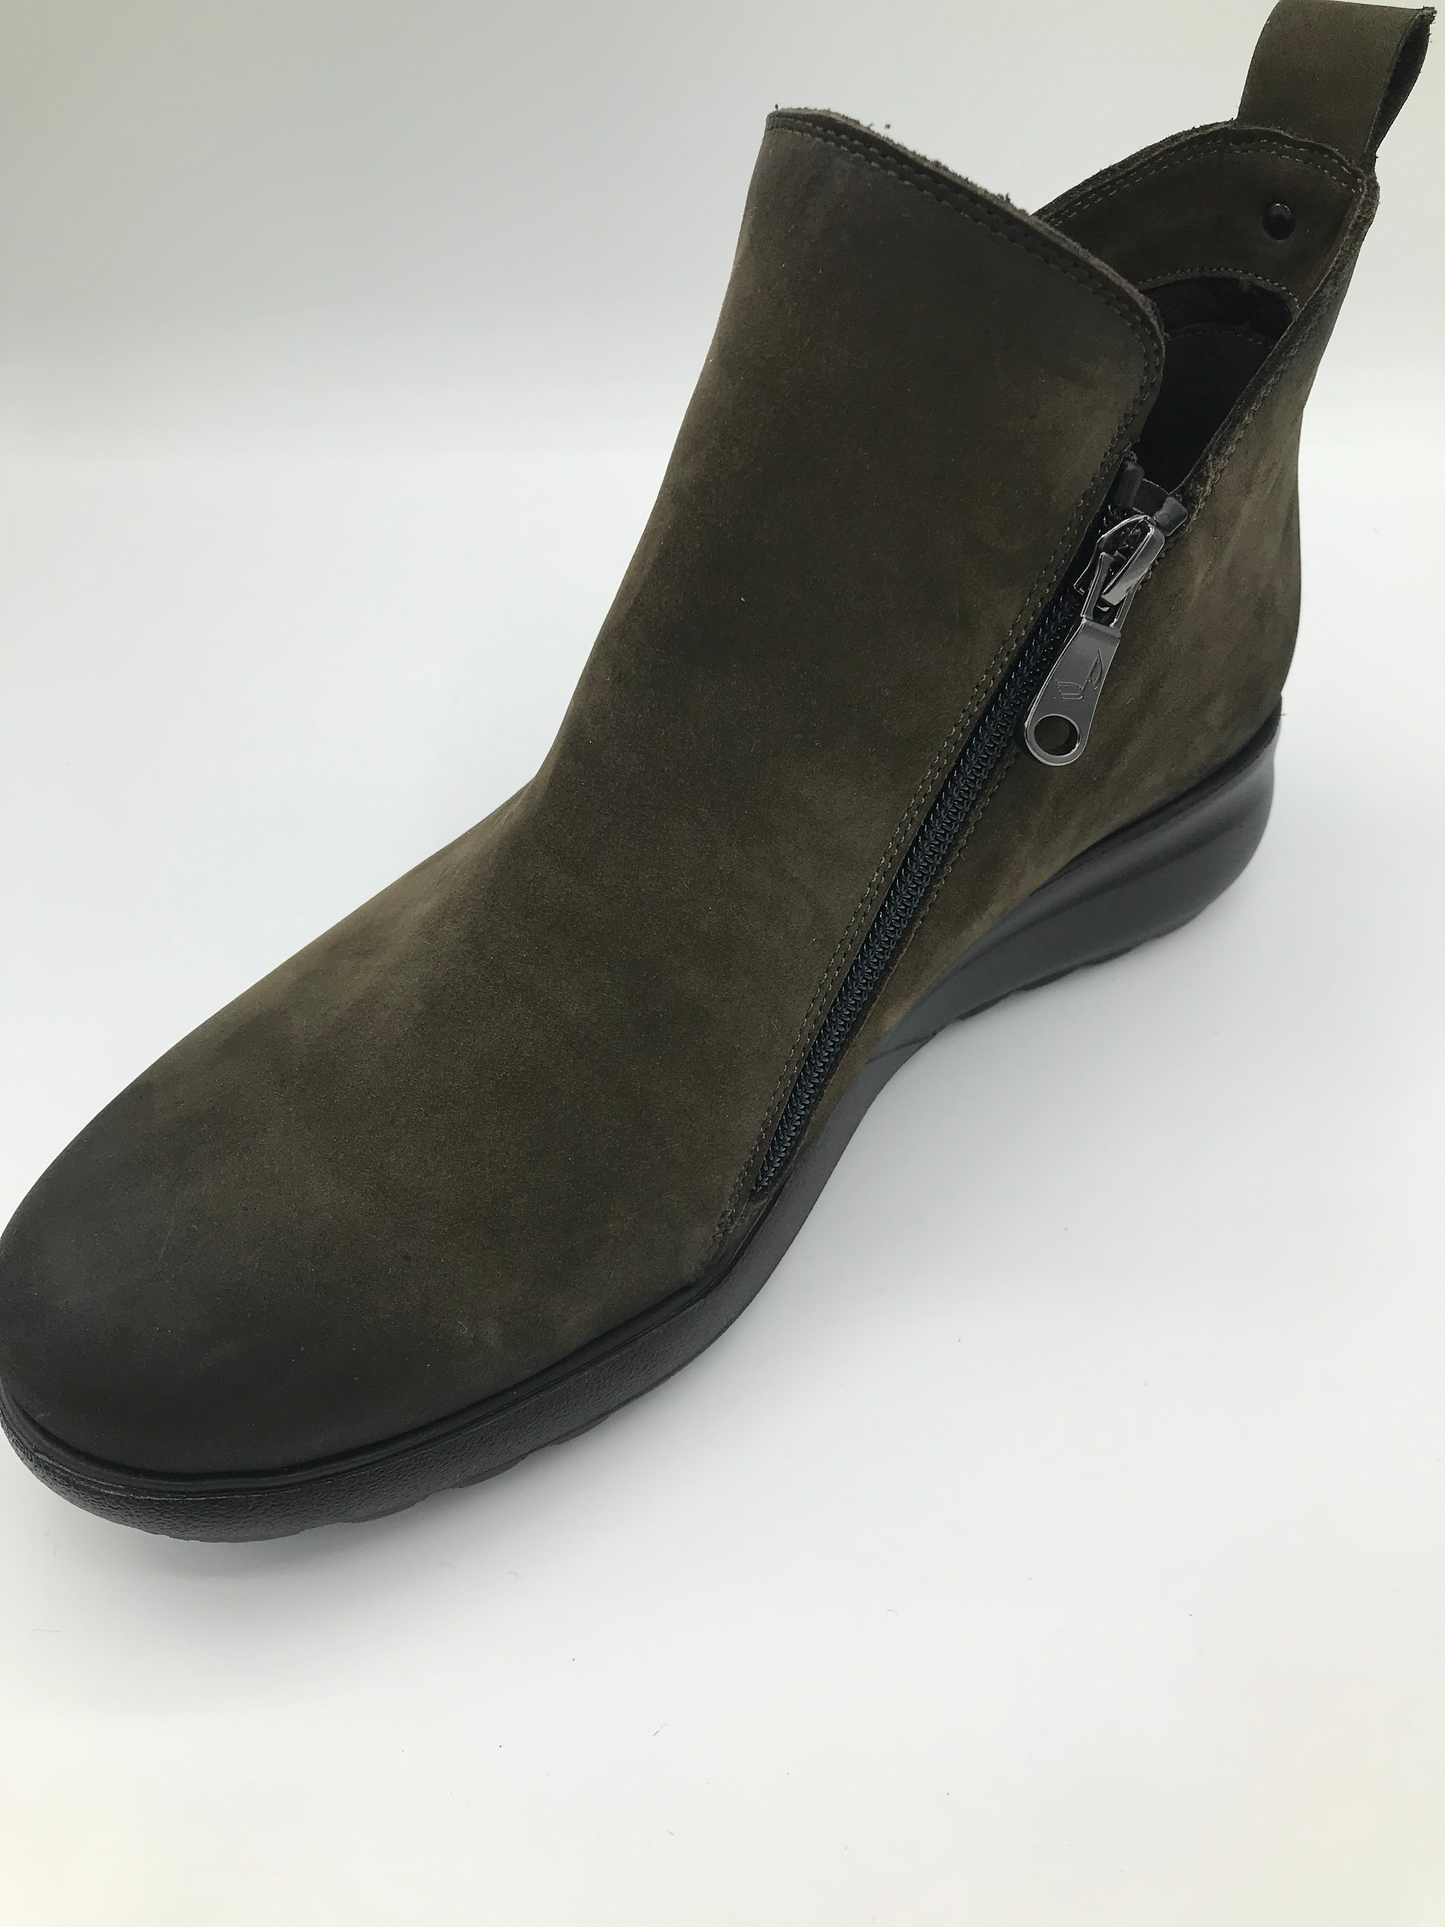 Paula Urban 3-1067 twin zipped Khaki ankle boot - Imeldas Shoes Norwich